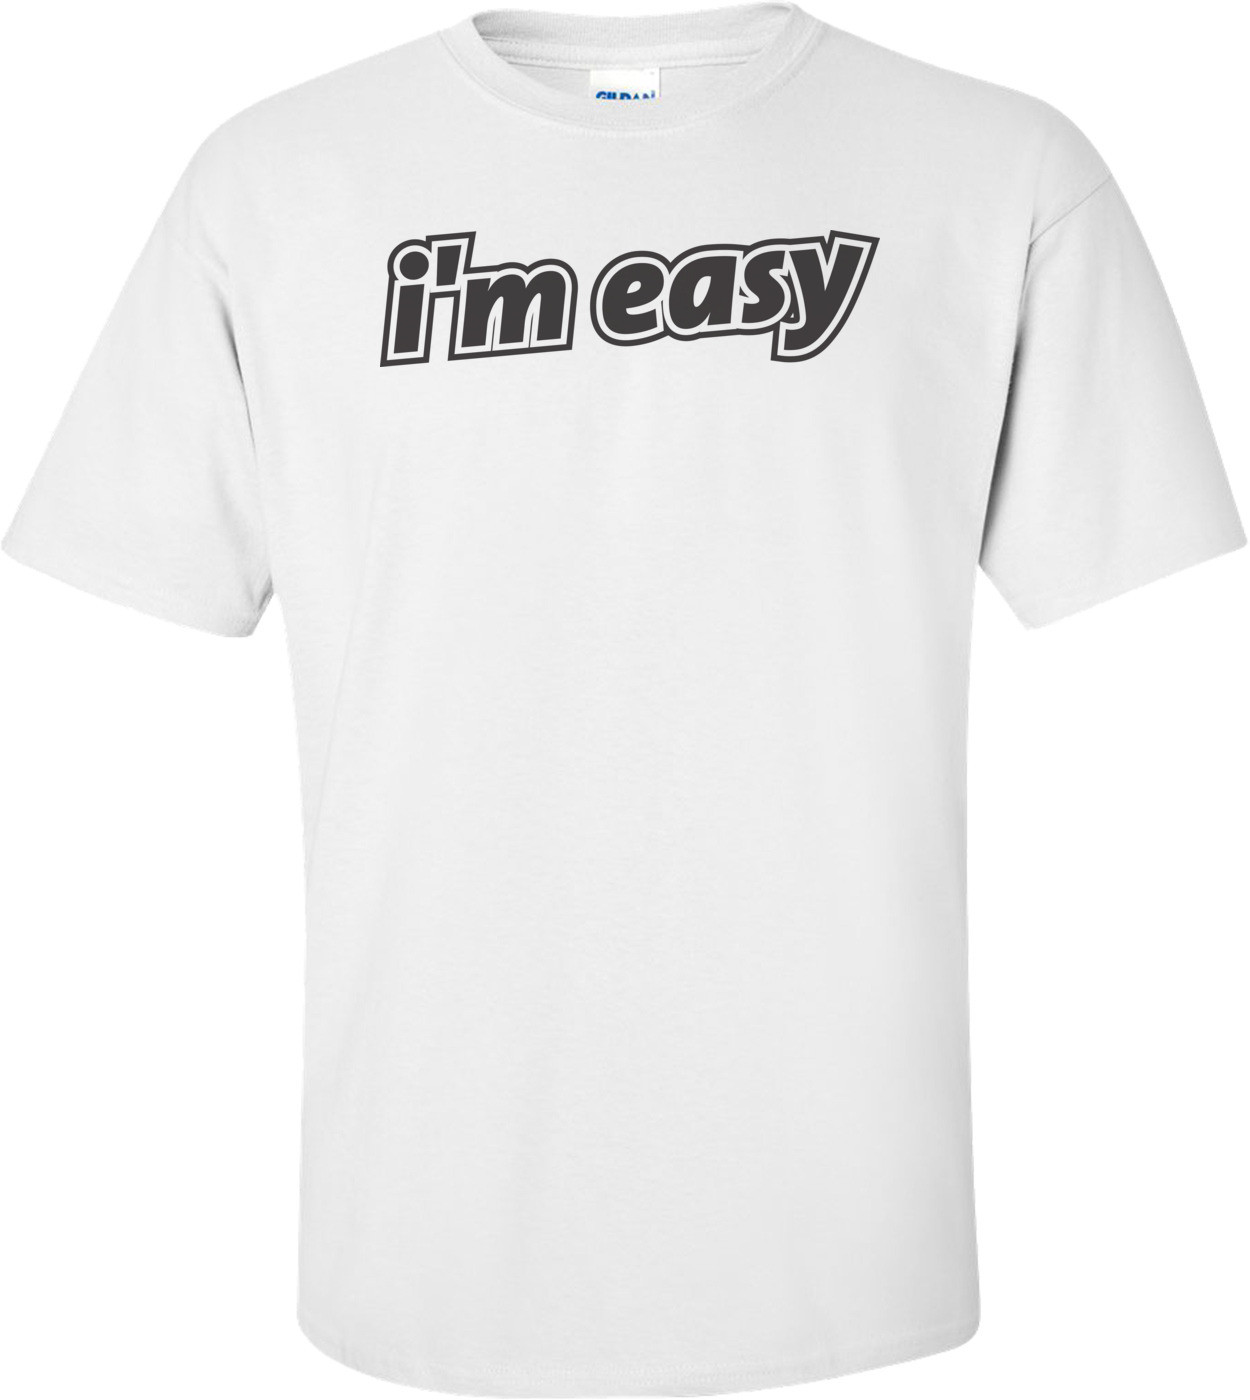 I'm Easy T-shirt